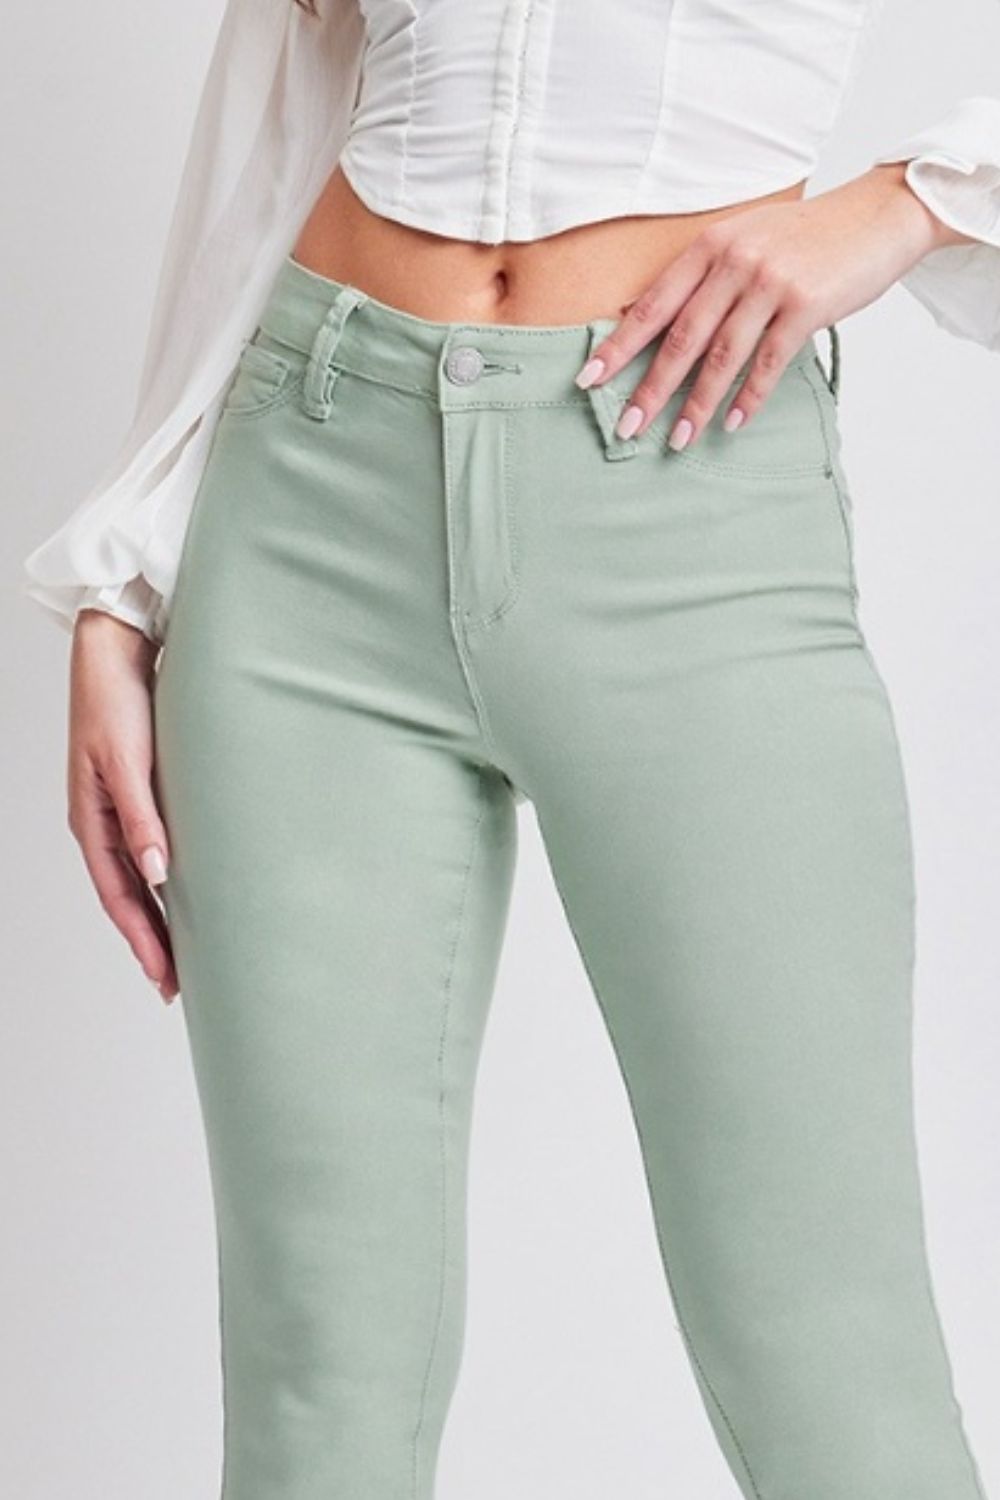 YMI Jeanswear Hyperstretch Mid-Rise Skinny Jeans Pants